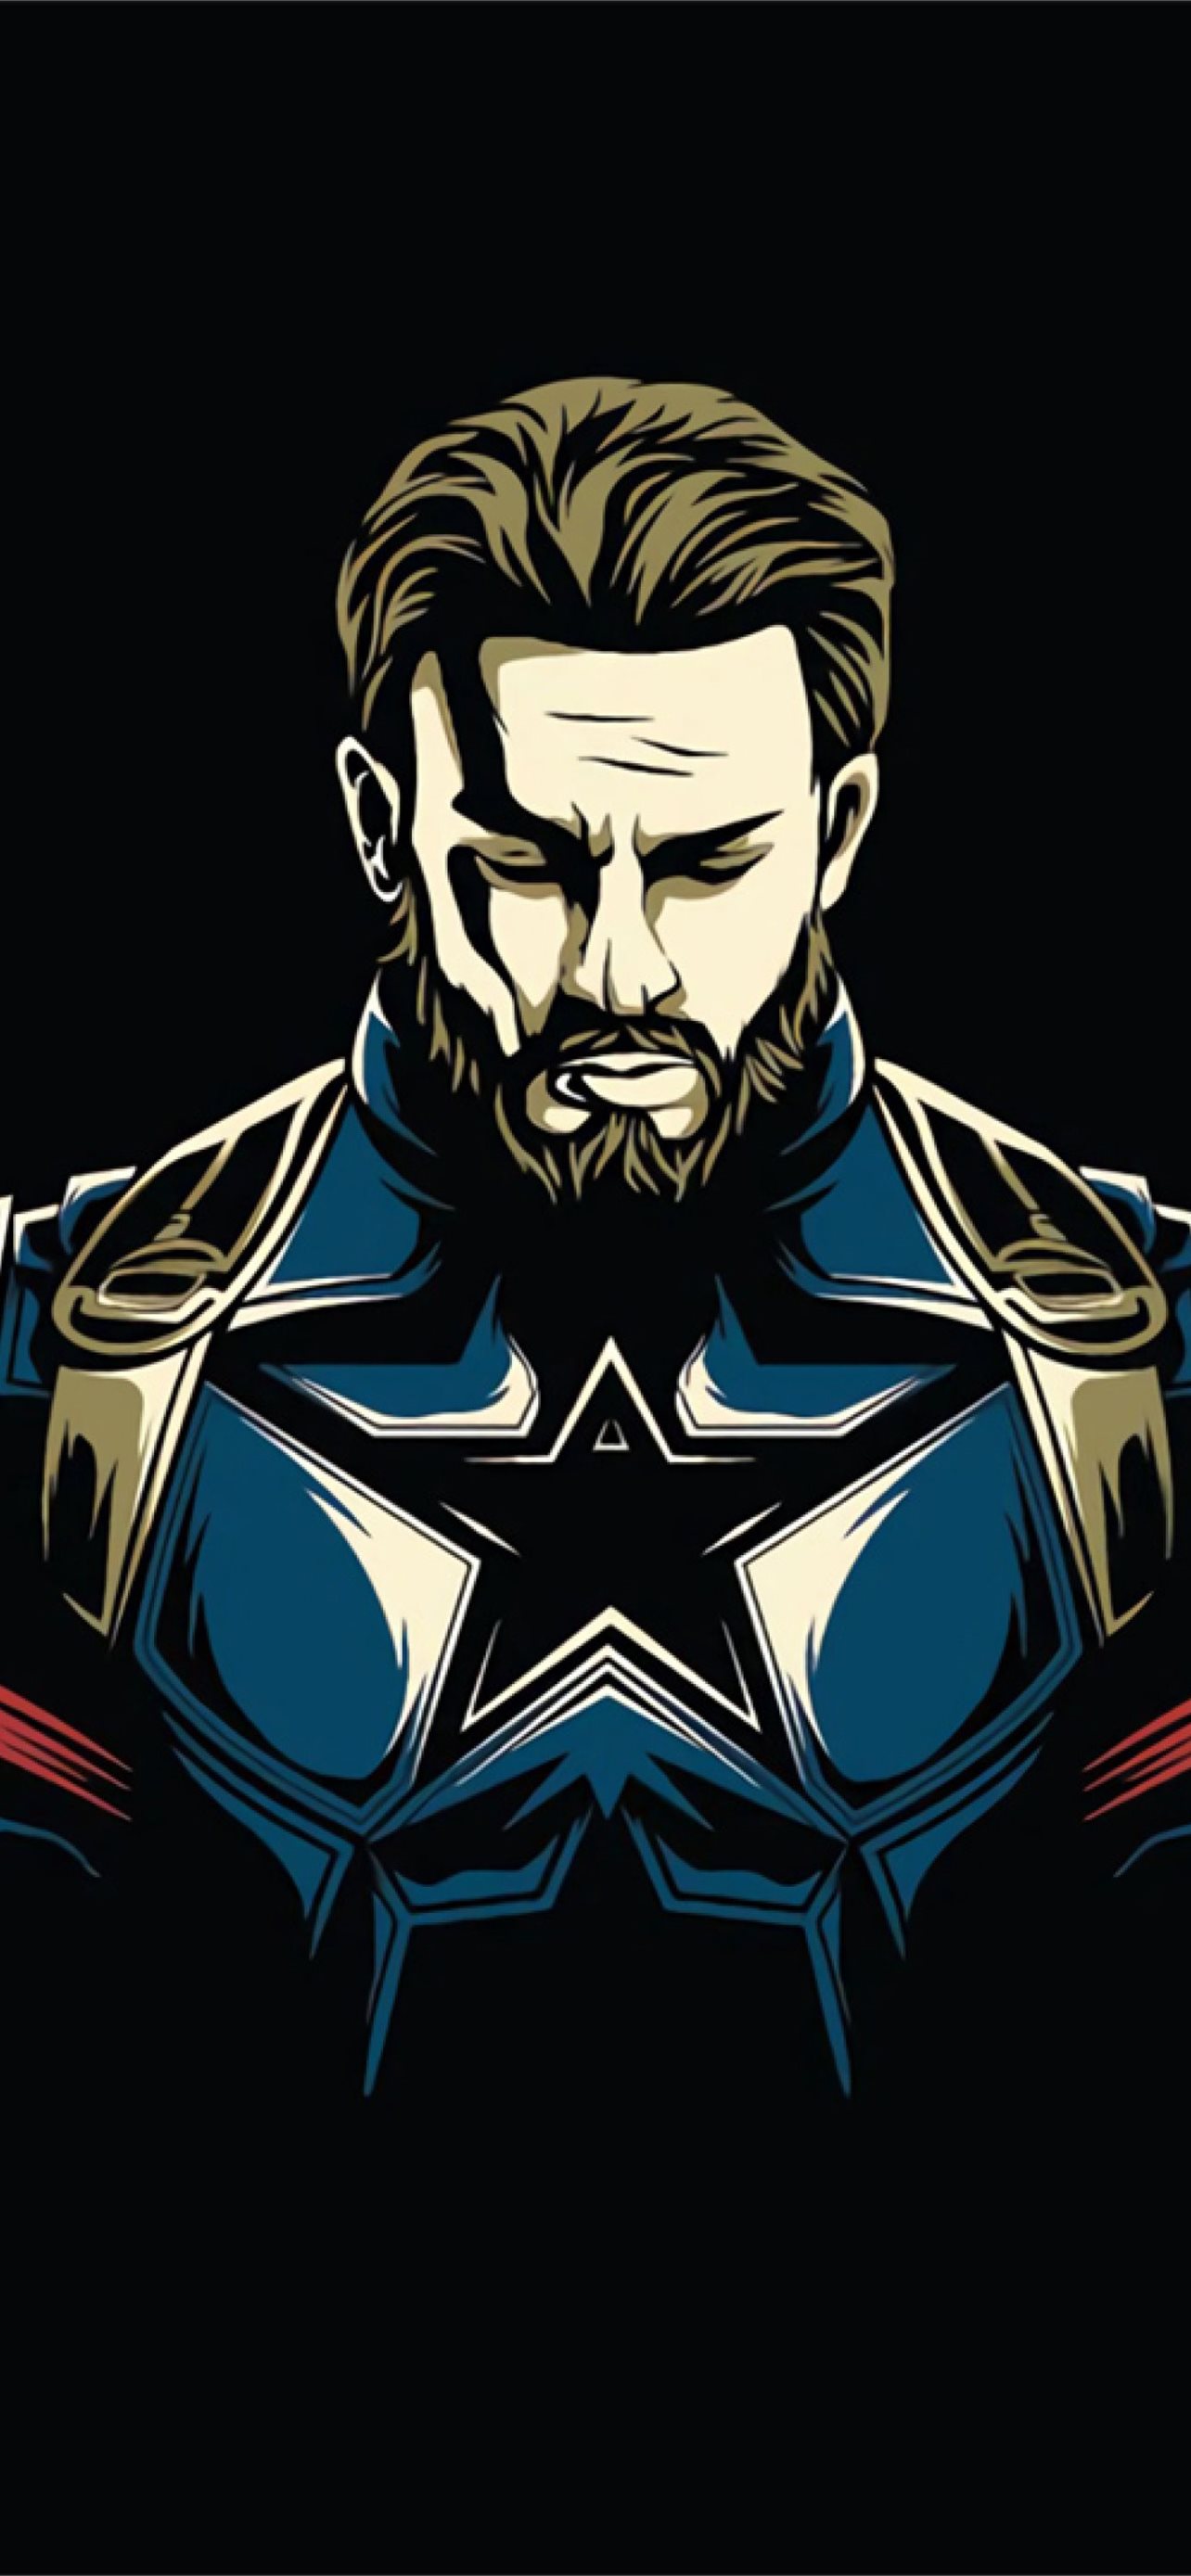 Wallpaper Captain America Marvel Comics 4K Art 18562